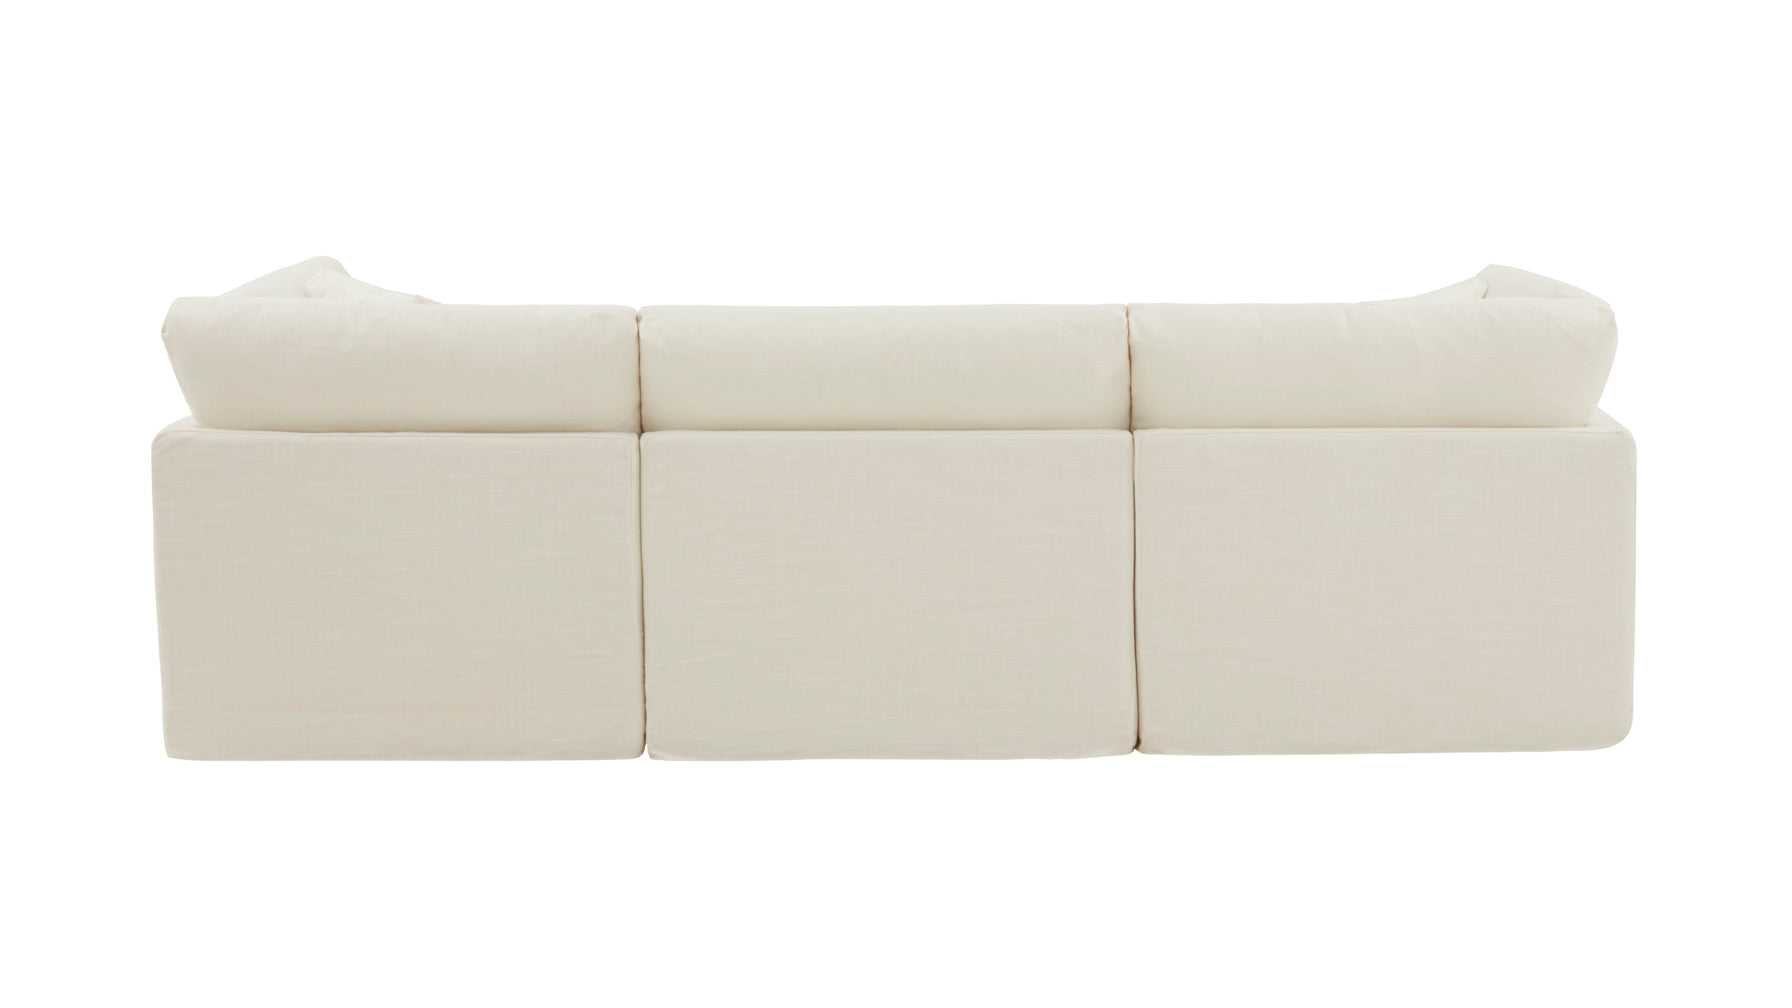 Get Together™ 3-Piece Modular Sofa, Standard, Cream Linen - Image 4